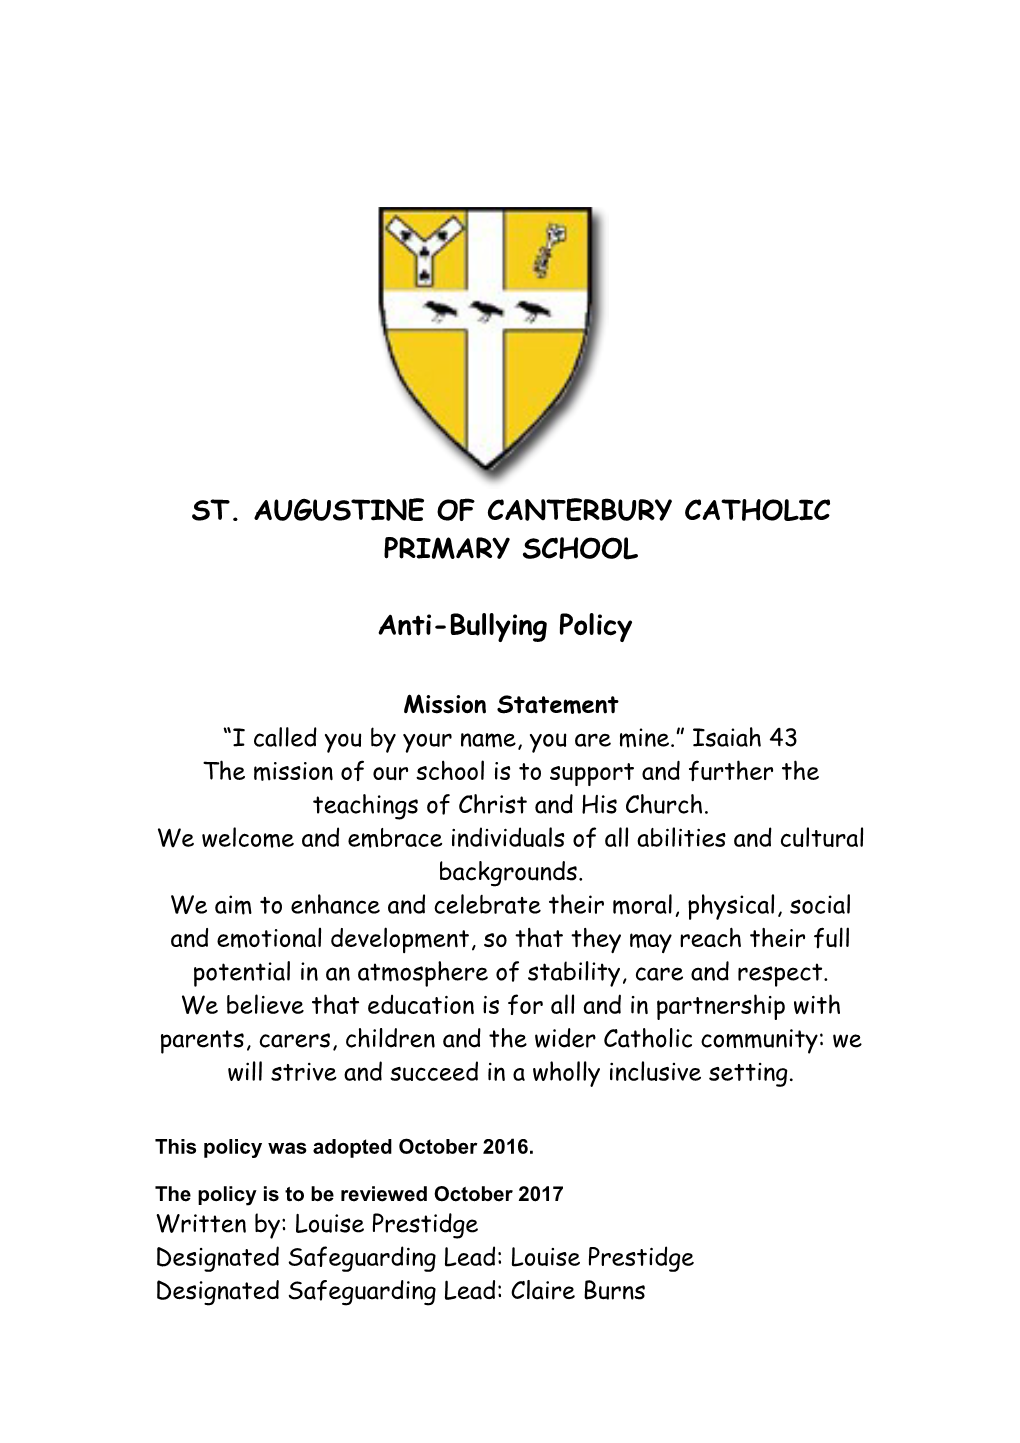 St Augustine of Canterbury Catholic Primary School